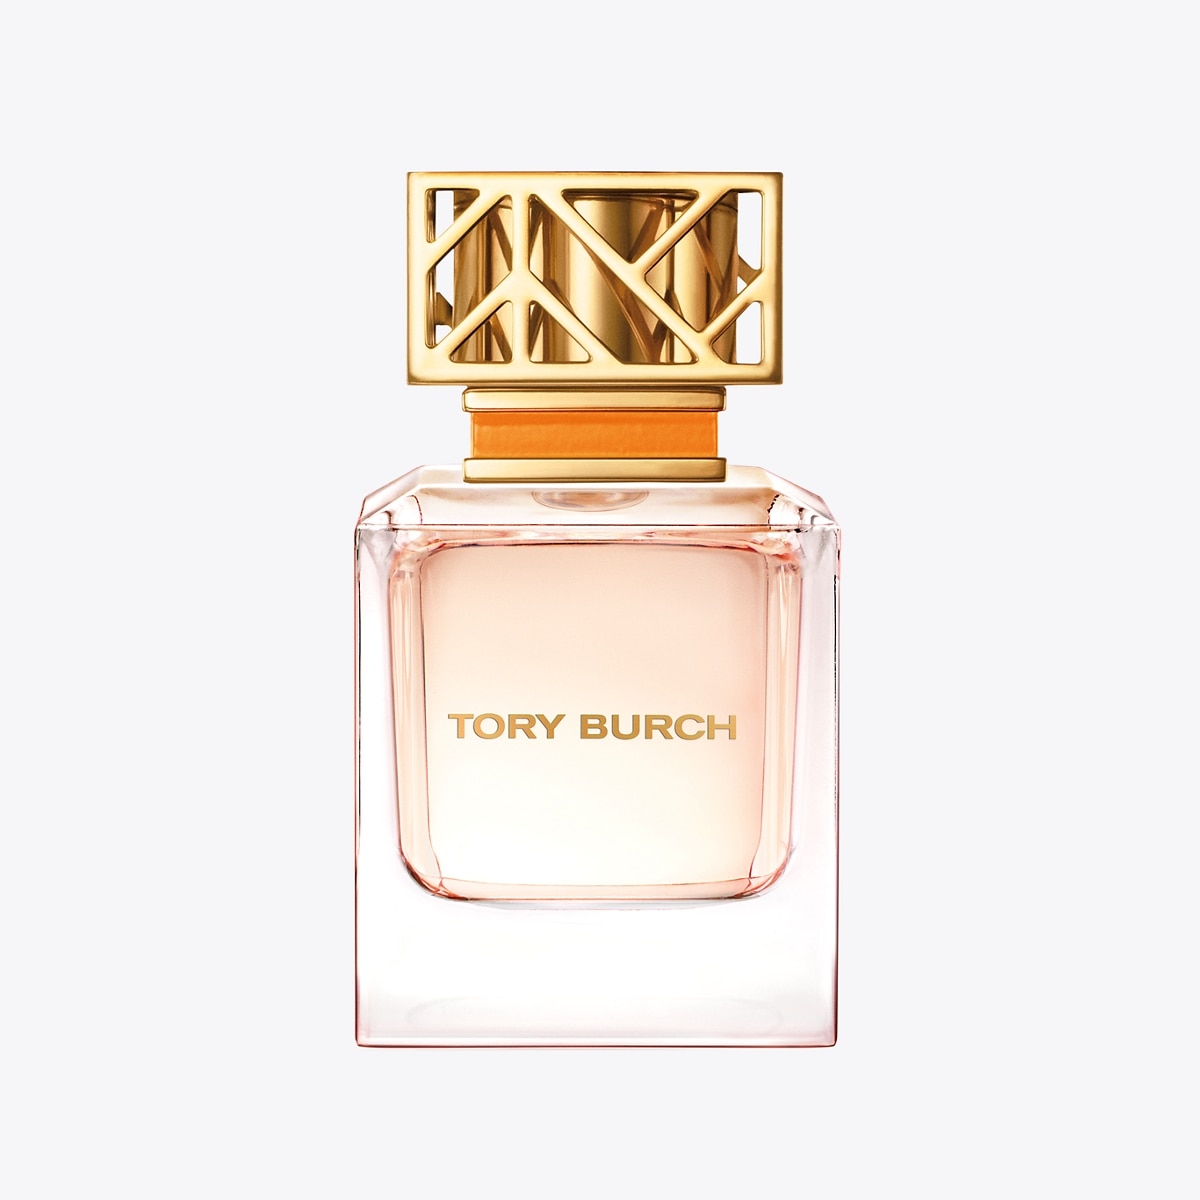 Introducir 90+ imagen tory burch perfume 50ml